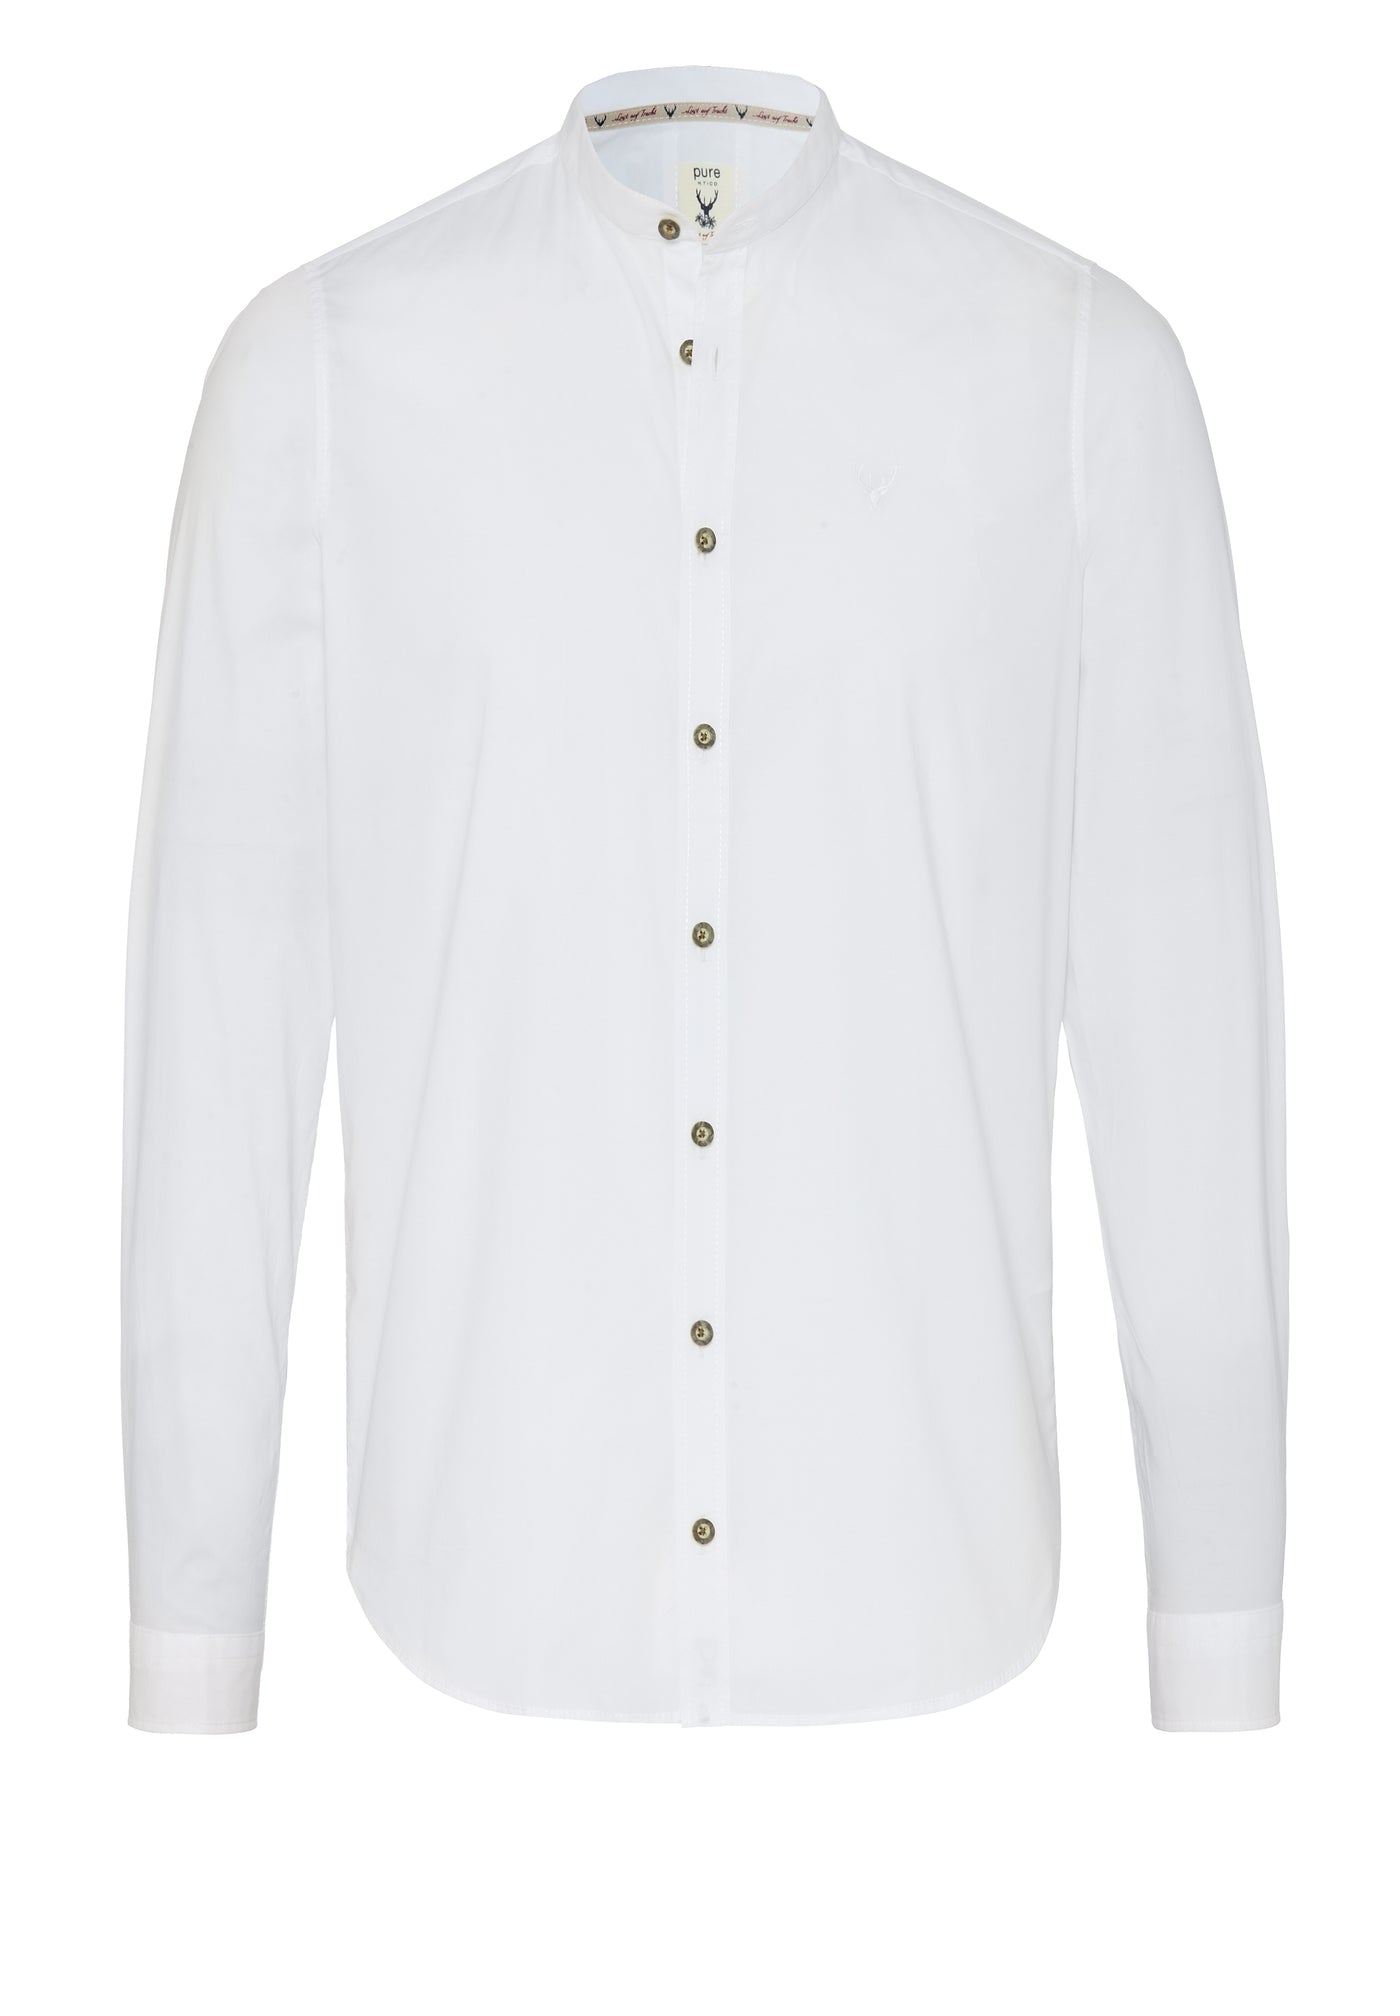 5011-21690 - Traditional shirt slim fit - white